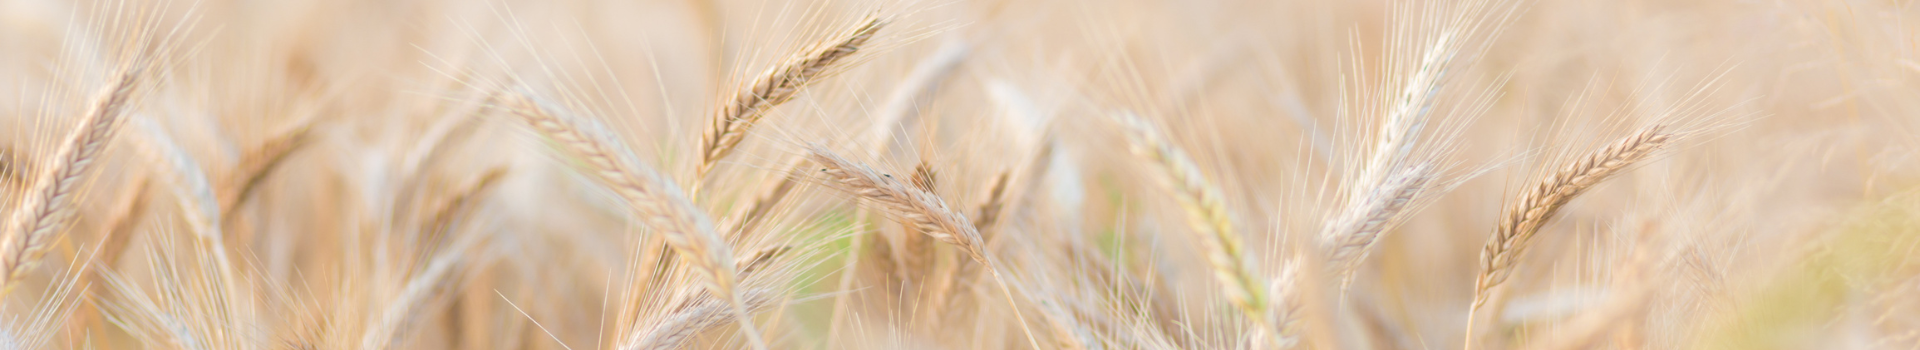 Disease Models - wheat